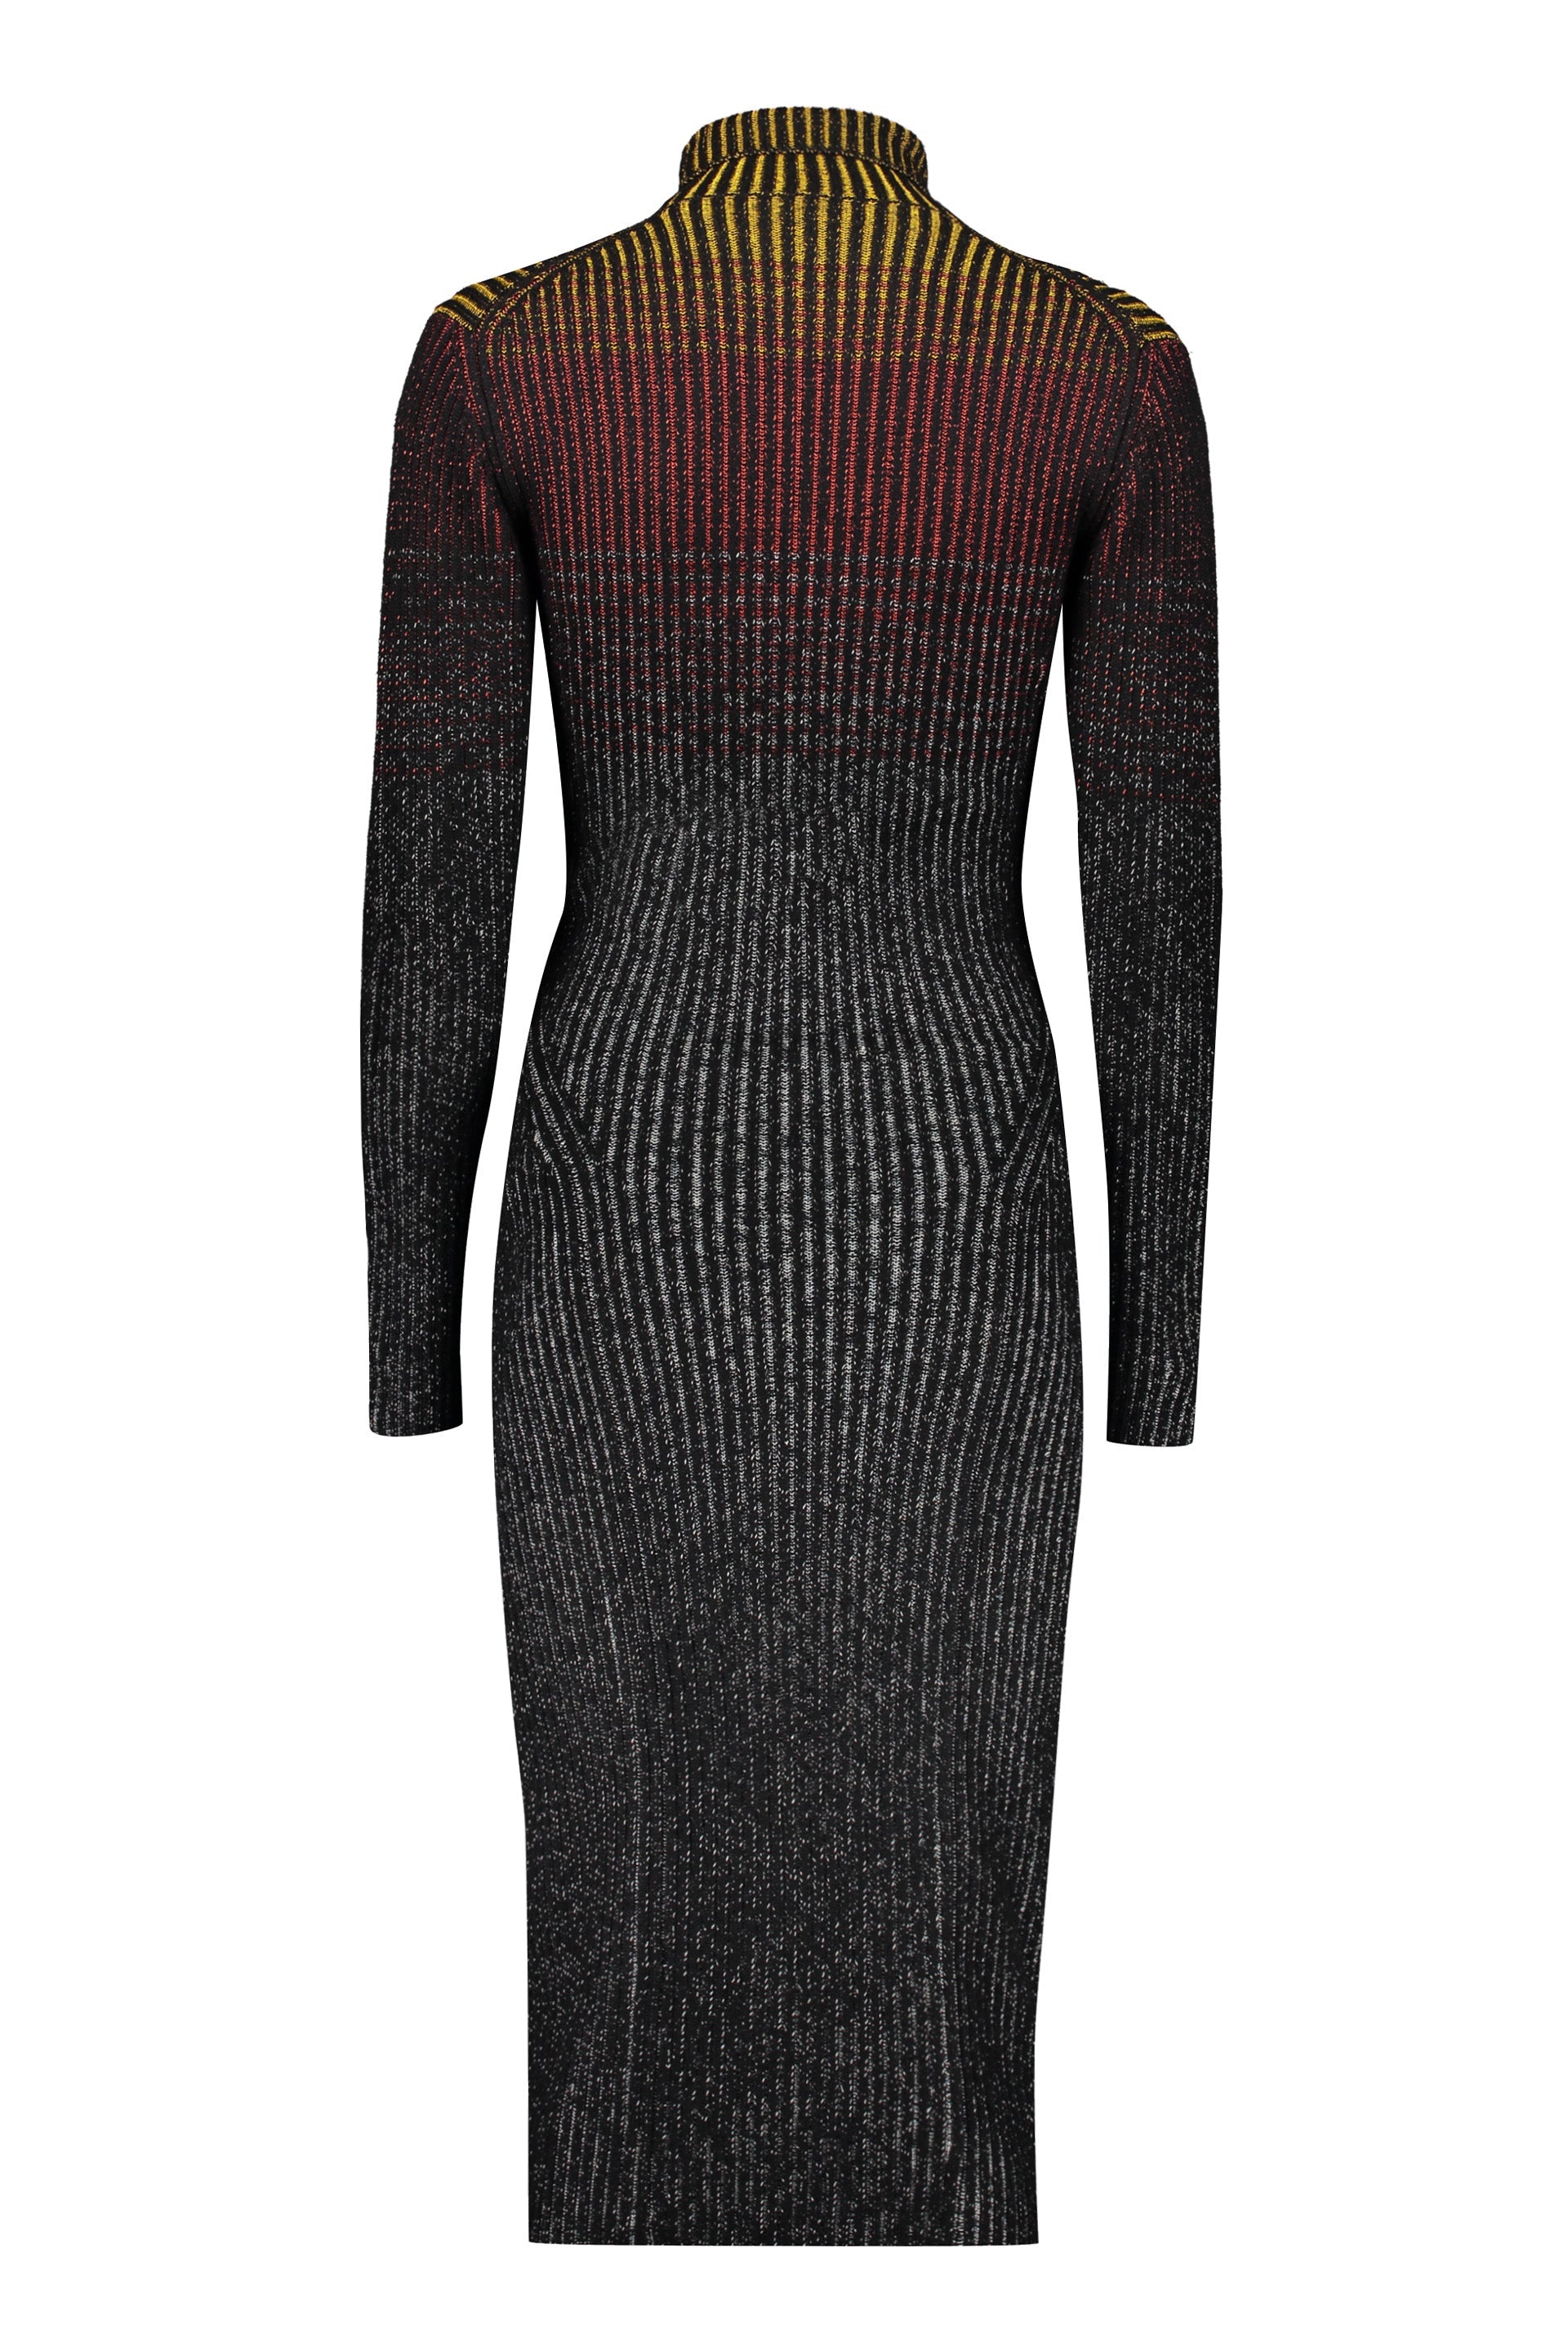 Missoni-OUTLET-SALE-Ribbed-knit-dress-Kleider-Rocke-40-ARCHIVE-COLLECTION-2.jpg